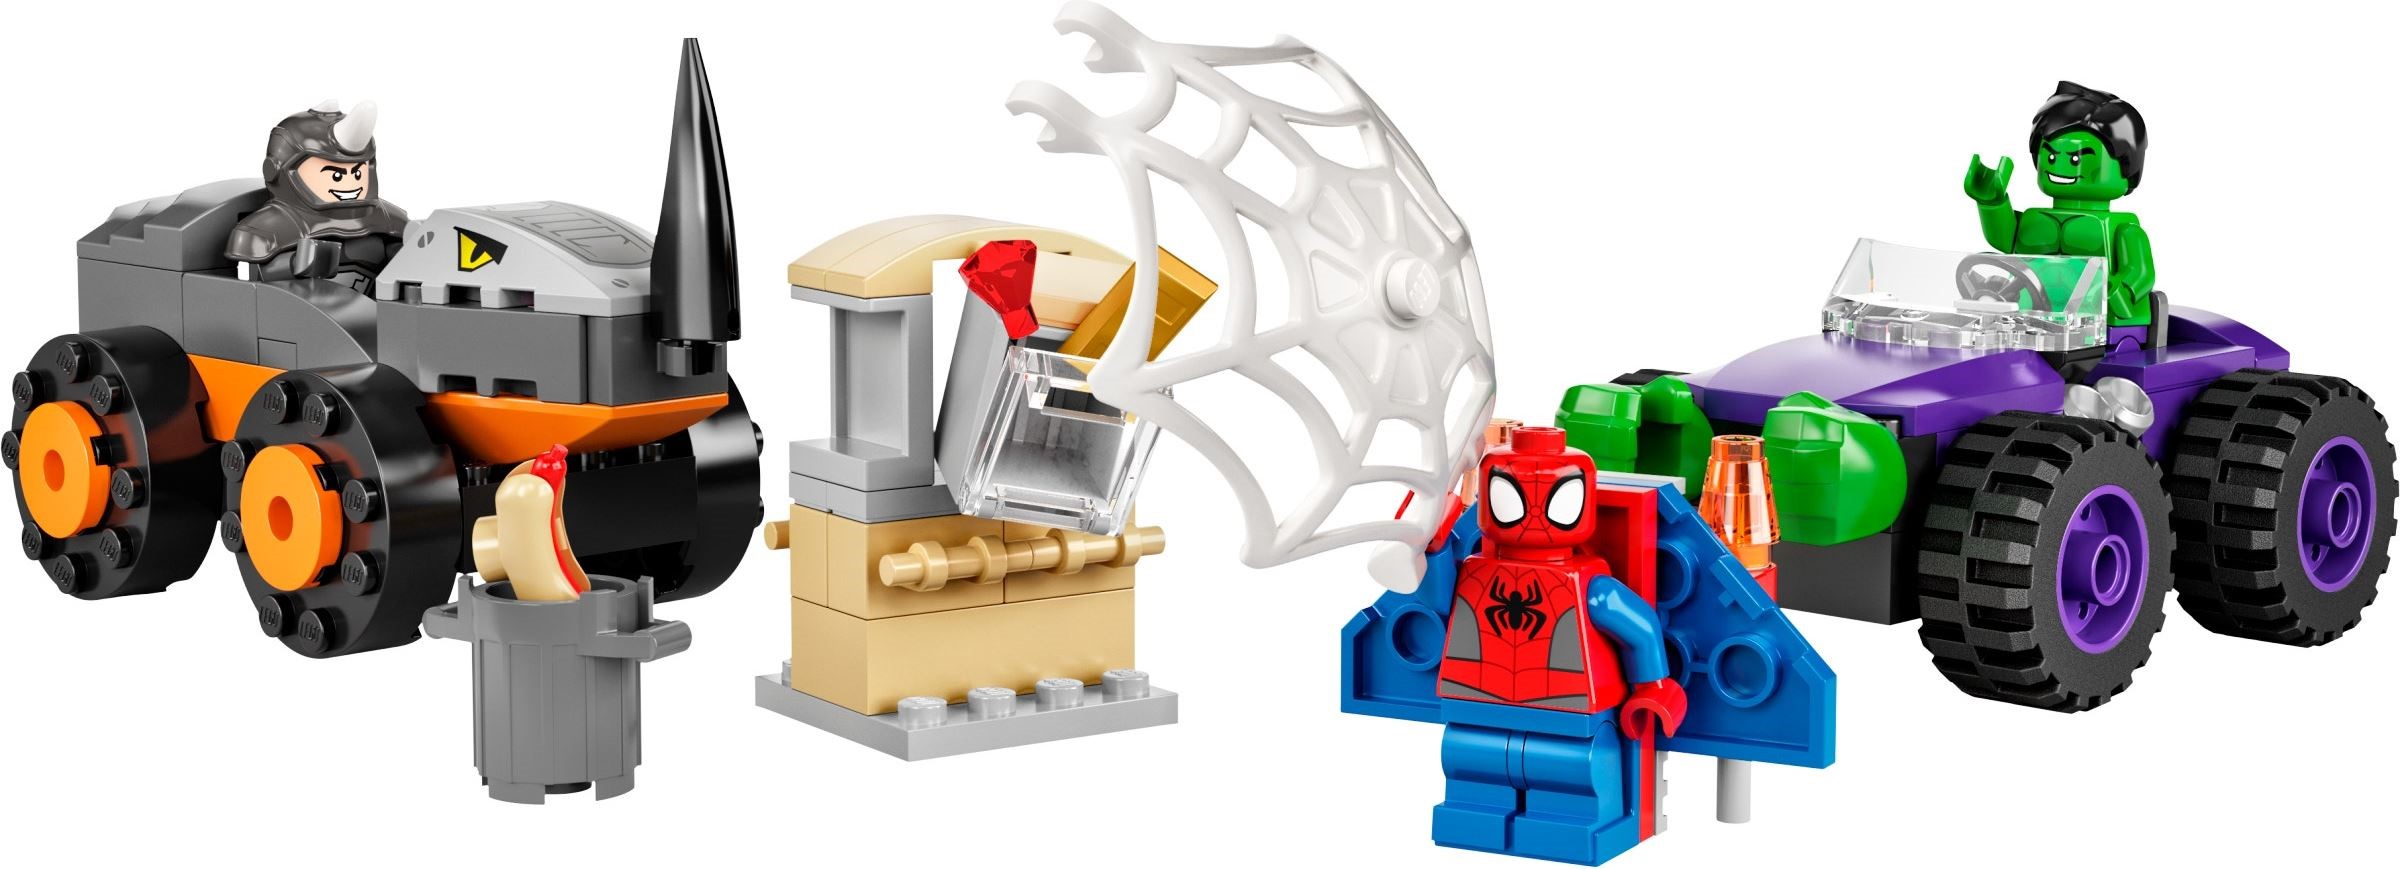 LEGO Marvel Heroes | Brickset